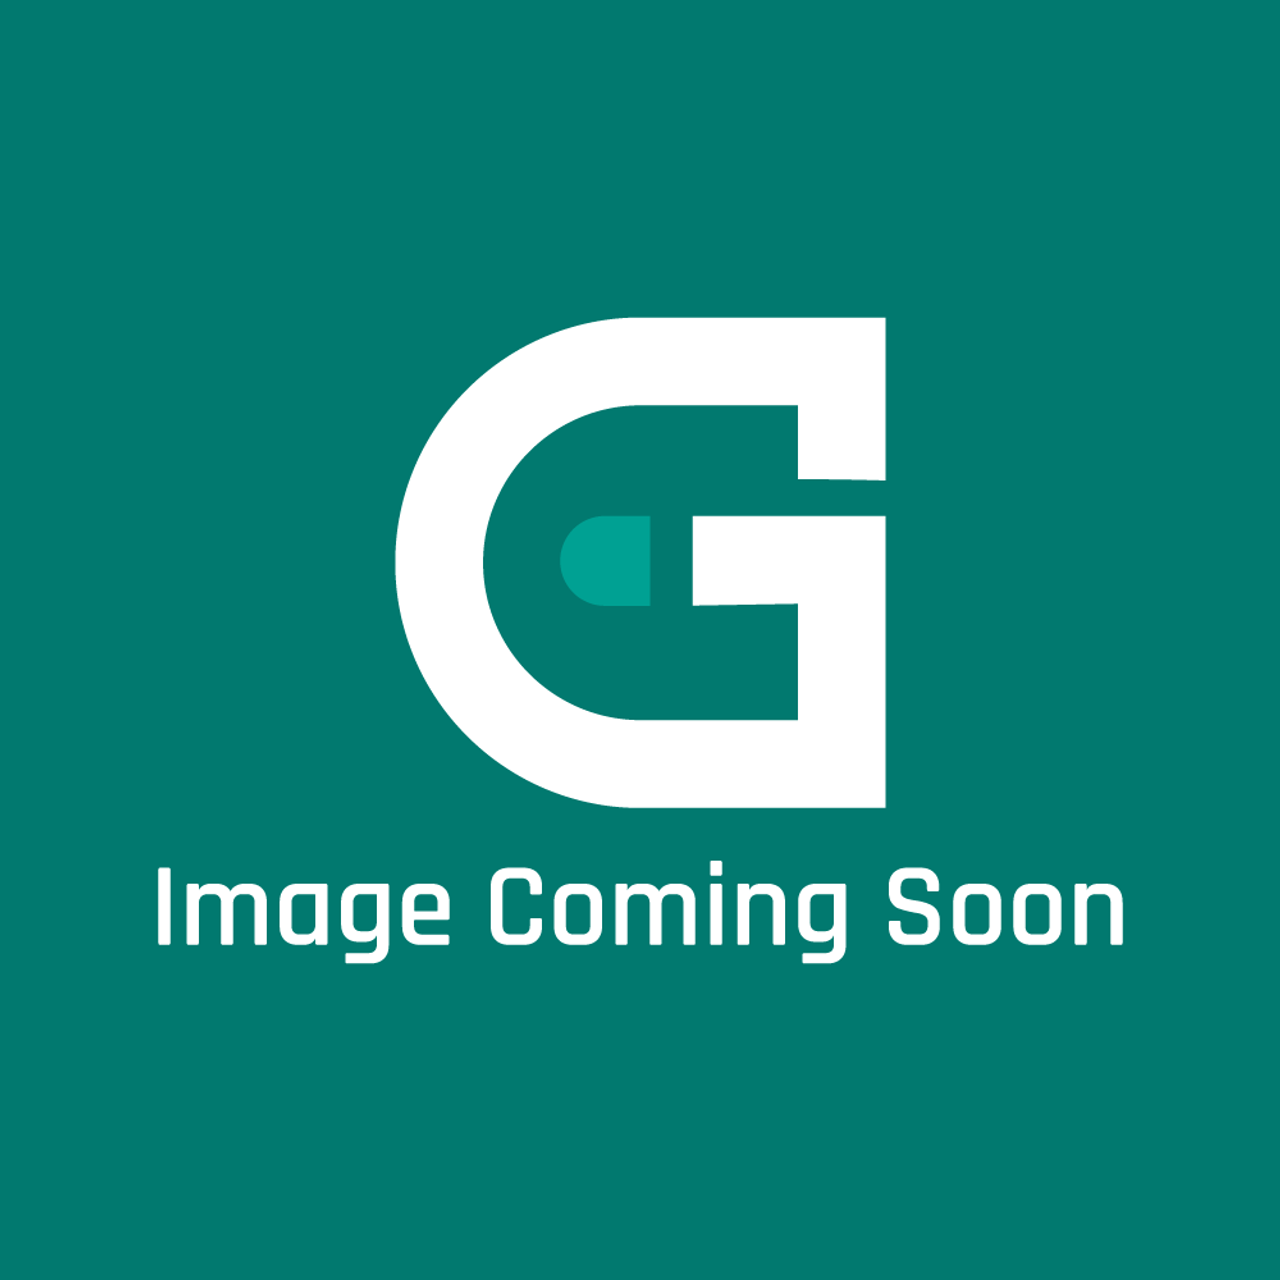 Frymaster 8160696 - Insltion, Kaowl O/F Fpp4 5 Fv Ff - Image Coming Soon!